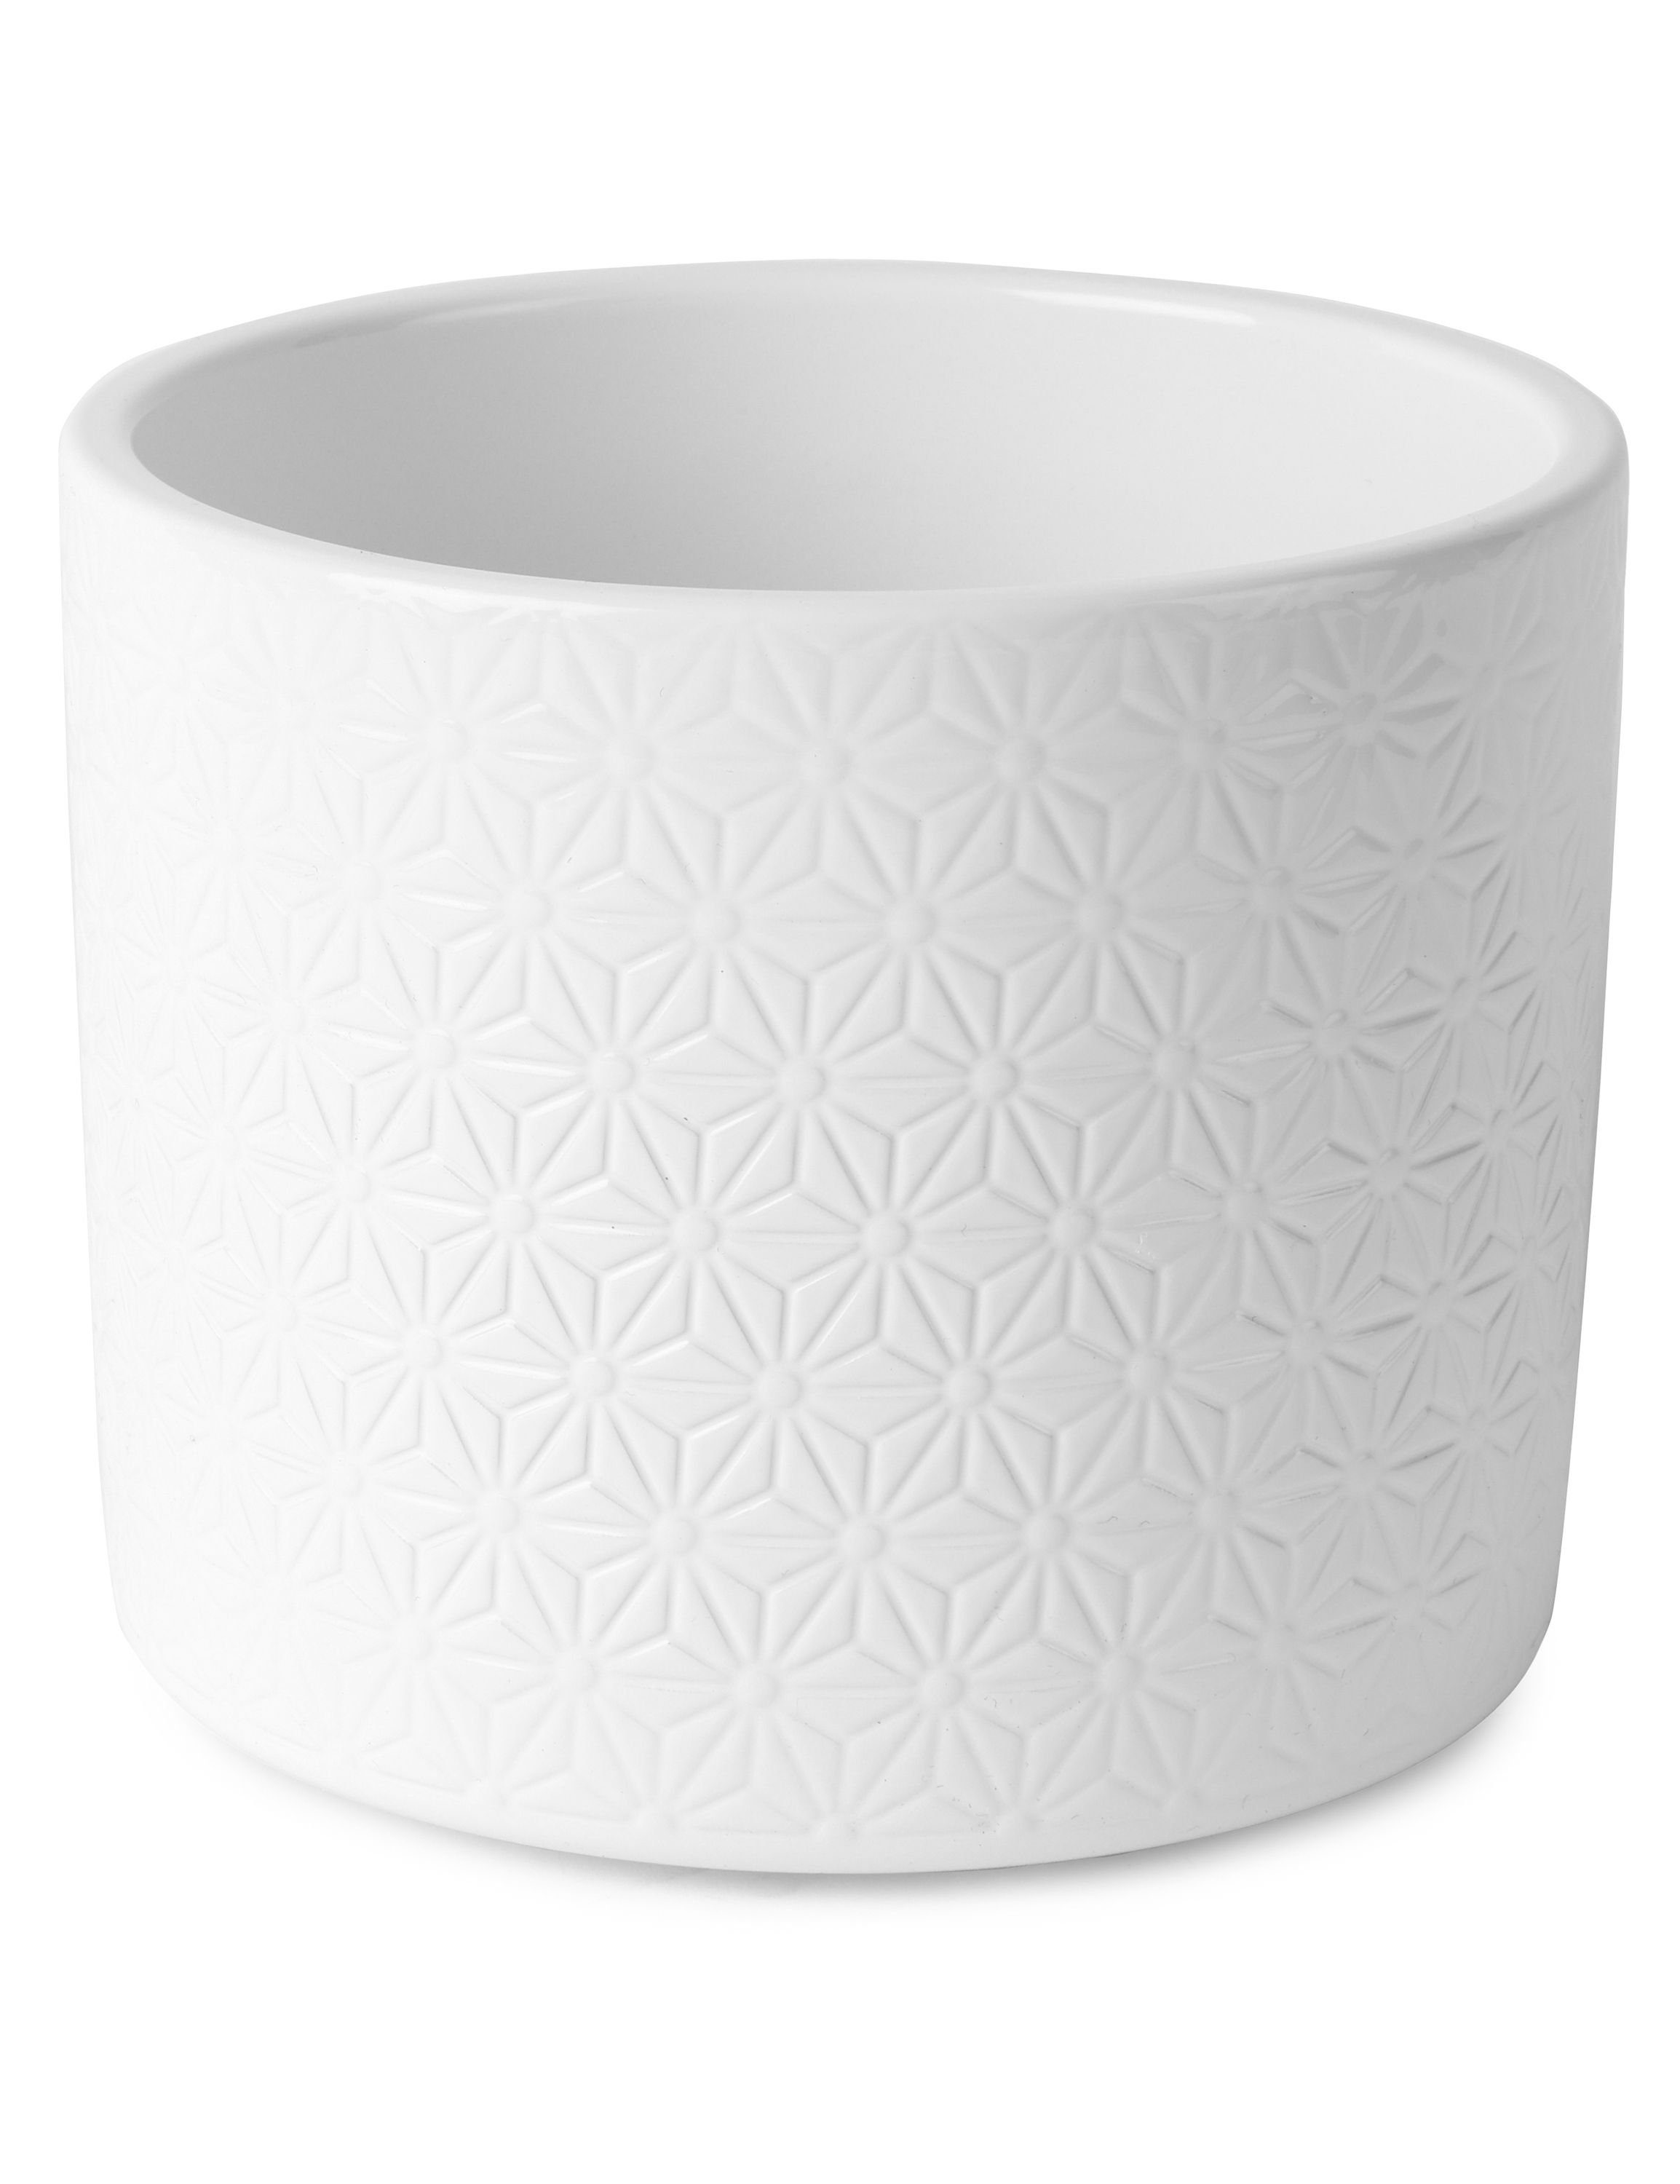 Garronda Übertopf Keramik GD-0018 Weiß Pflanzgefäß für Blumenmotiv Blumentopf B mit Blumentopf